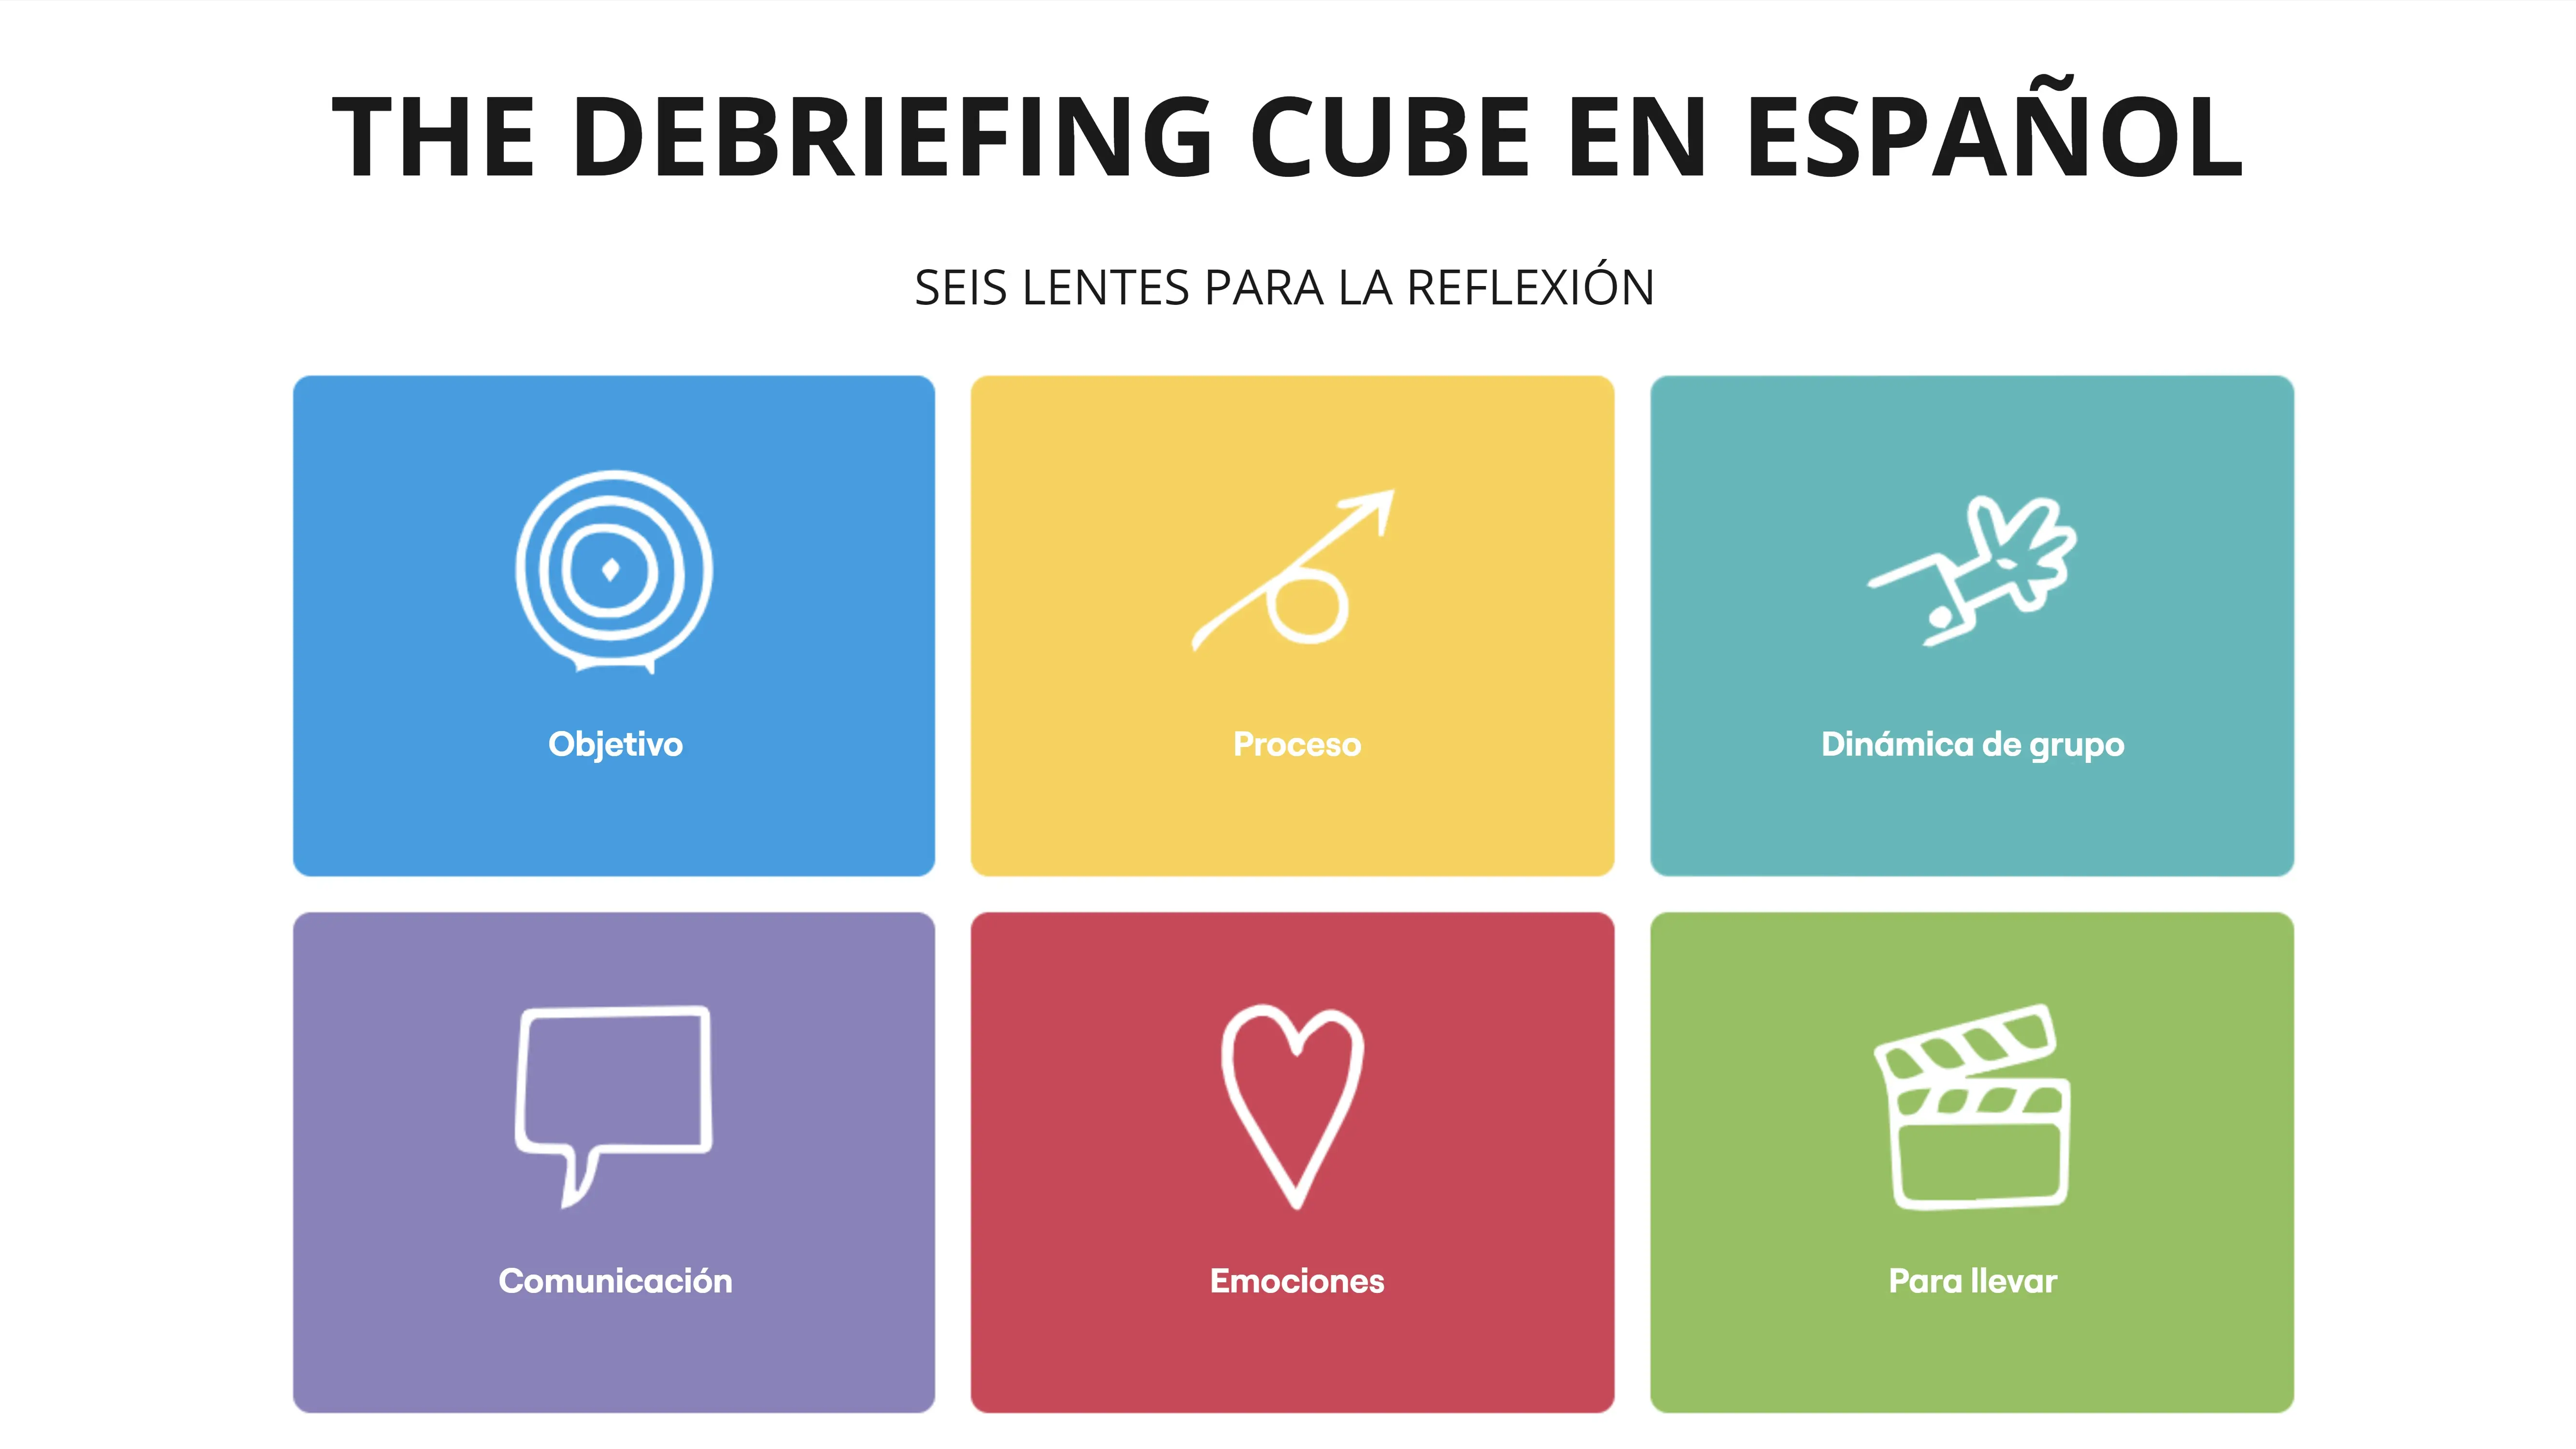 Template cover of THE DEBRIEFING CUBE EN ESPAÑOL